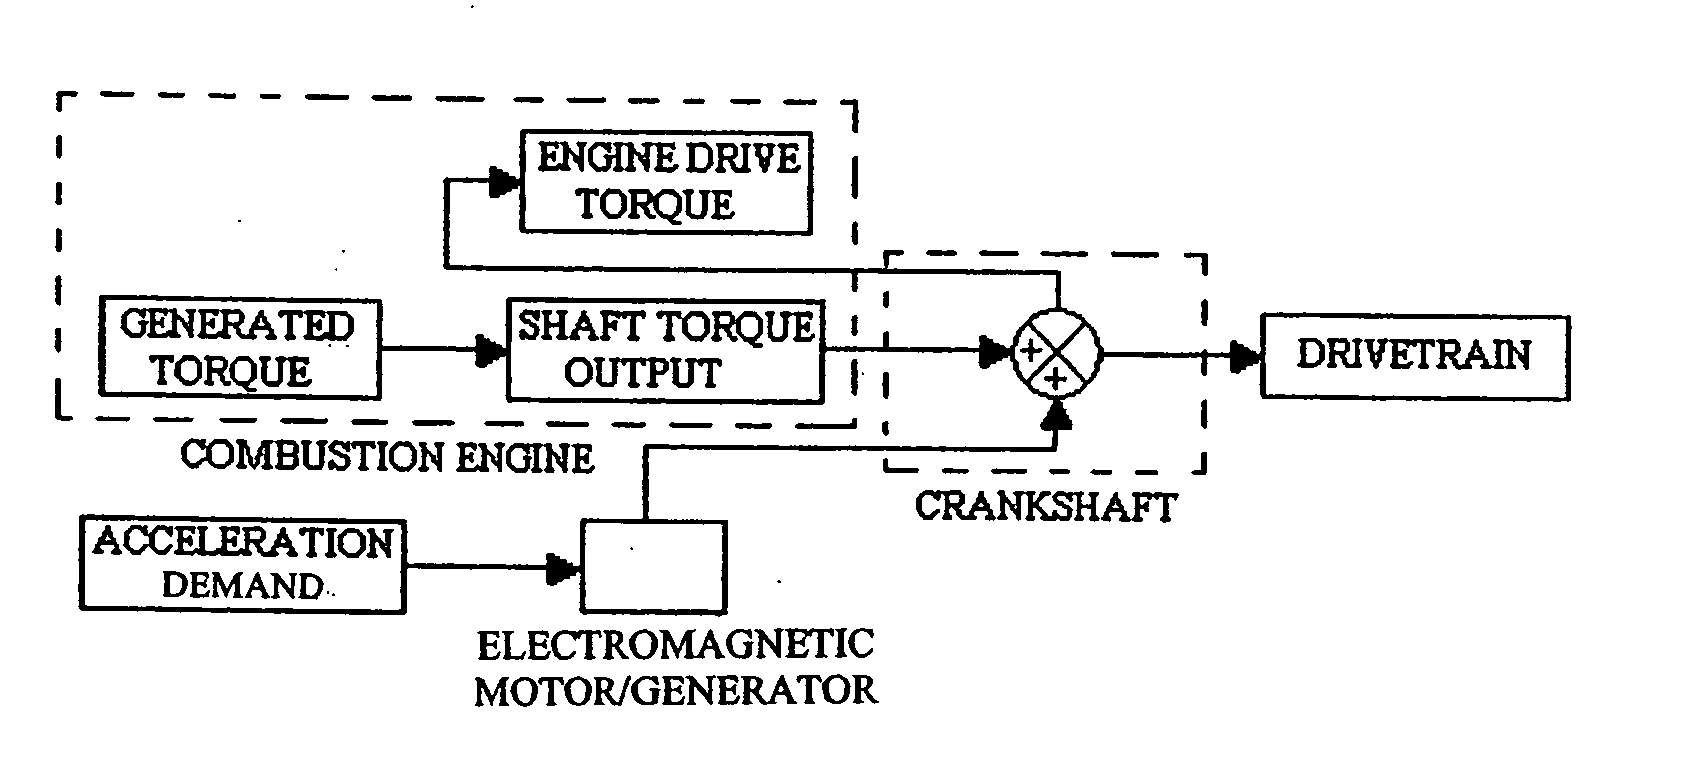 Combustion engine acceleration support using an integrated starter/alternator